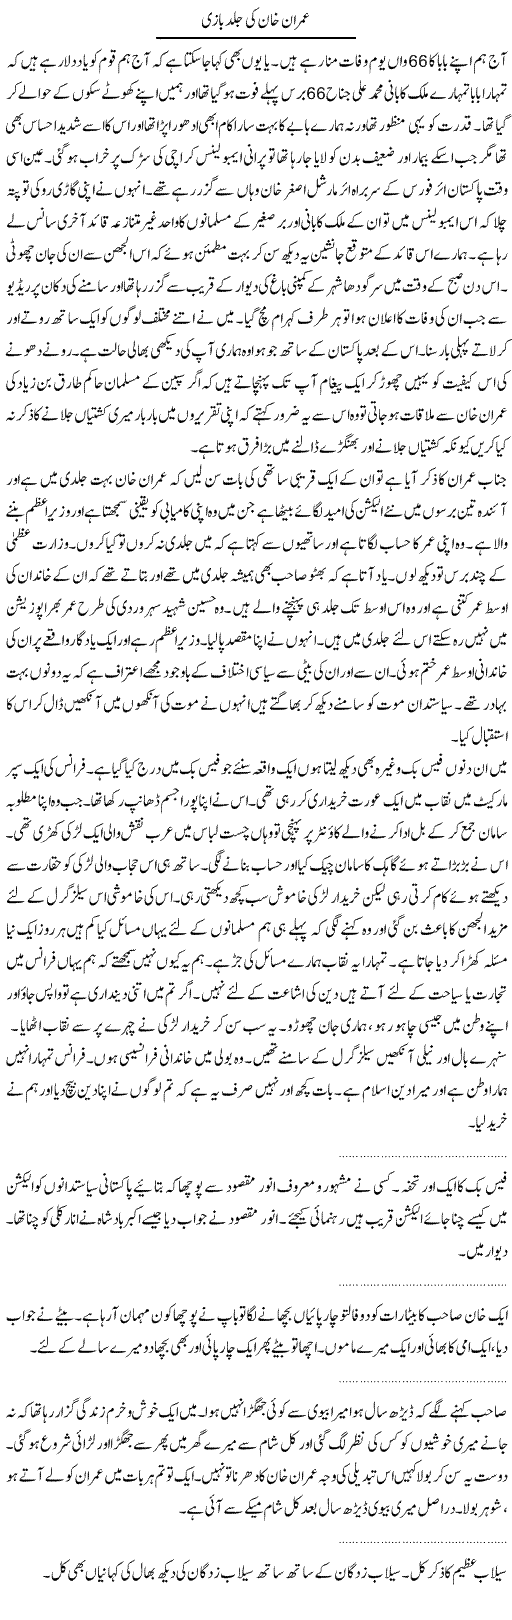 Imran Khan Ki Jald Bazi | Abdul Qadir Hassan | Daily Urdu Columns